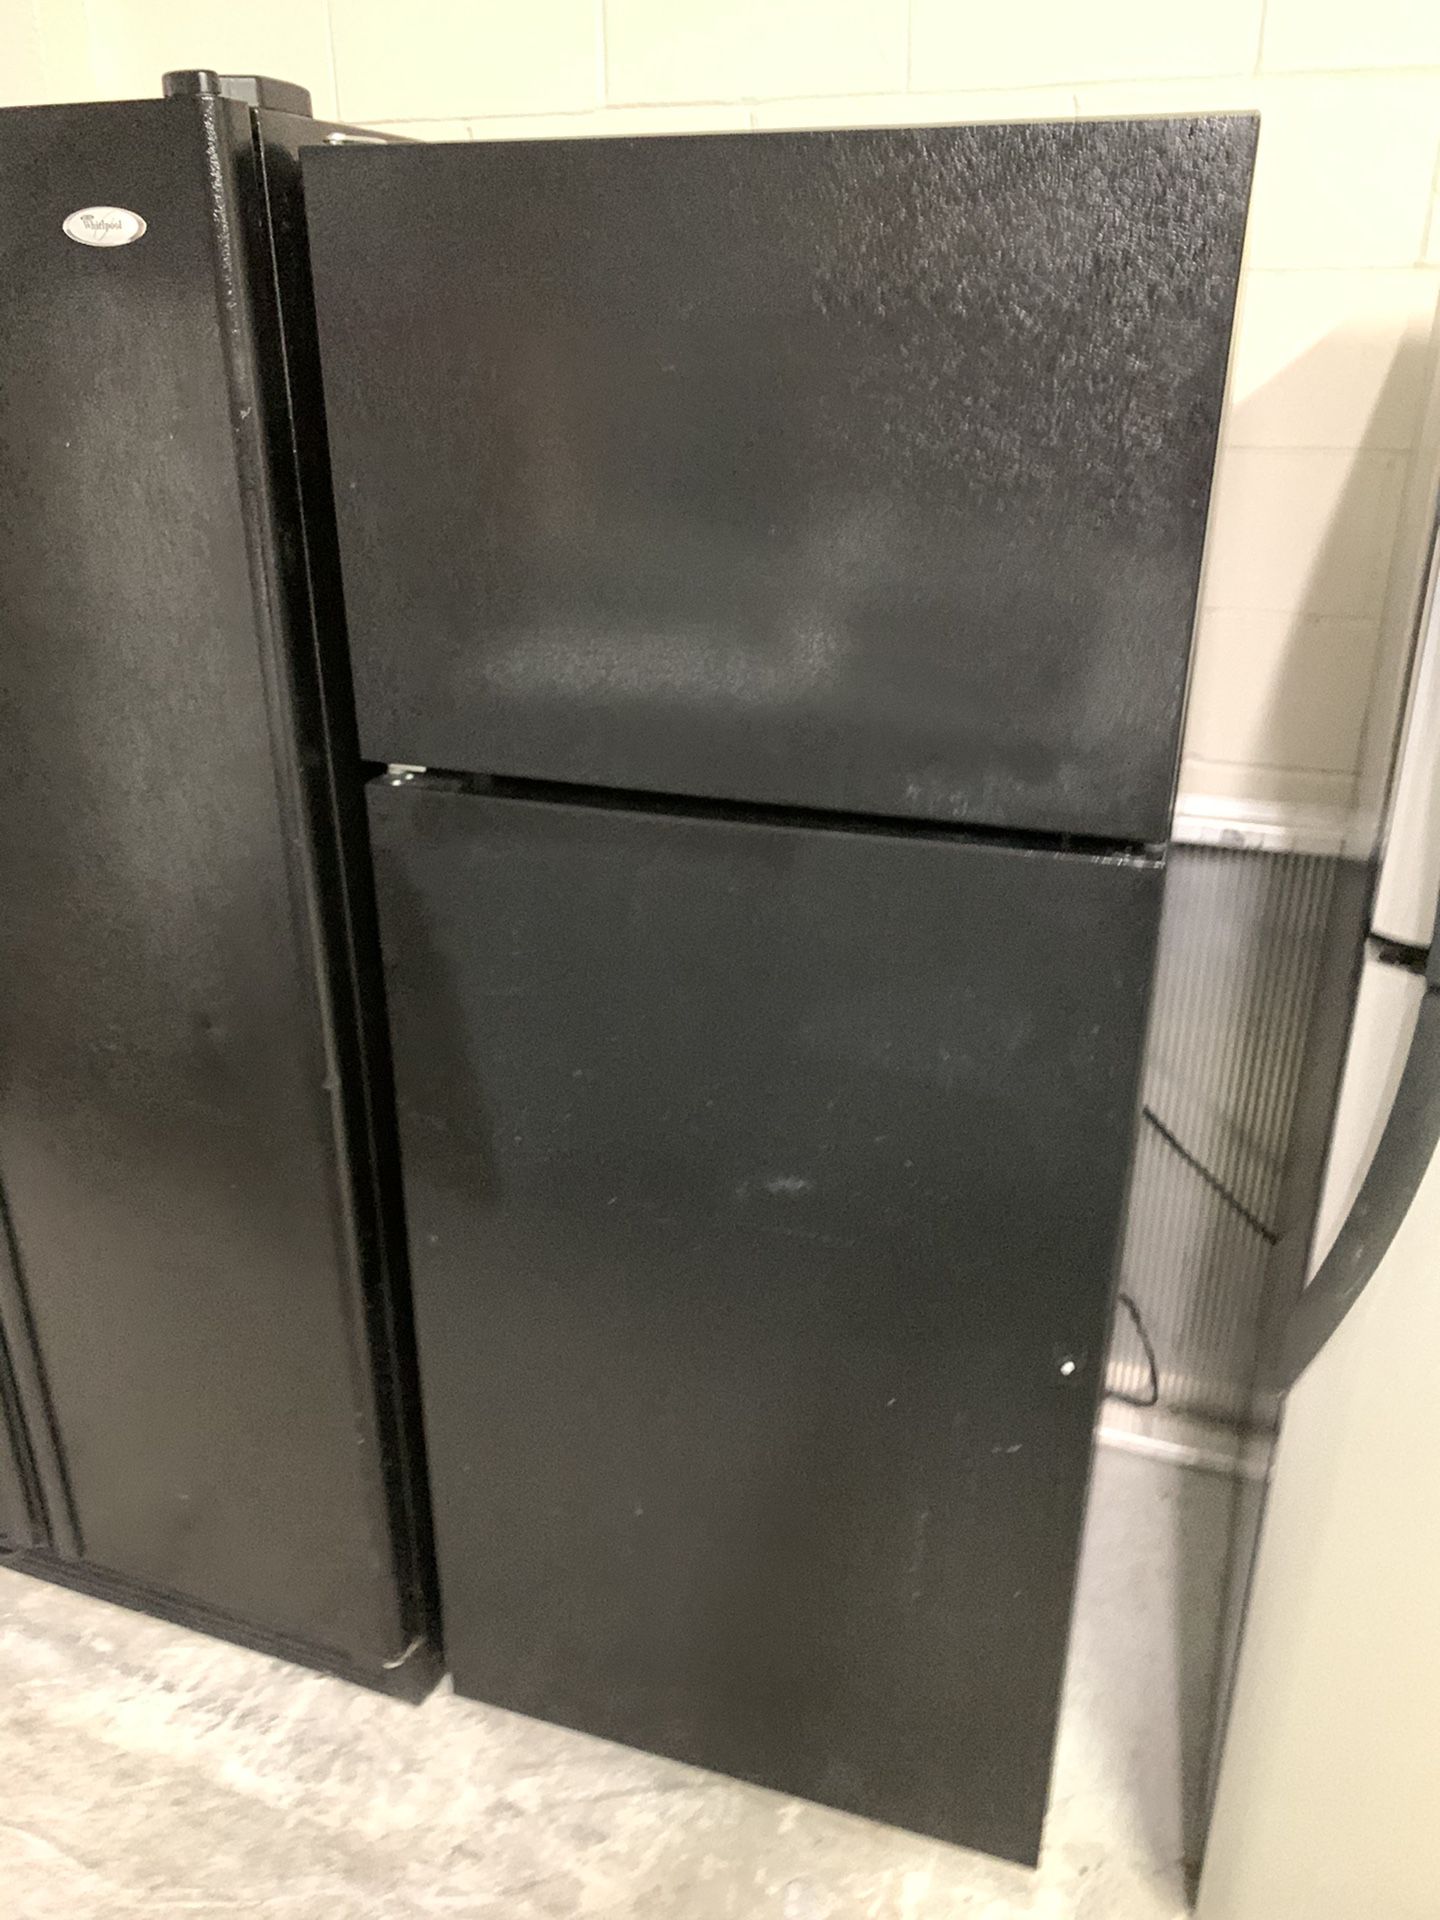 Black top bottom refrigerator perfect garage fridge